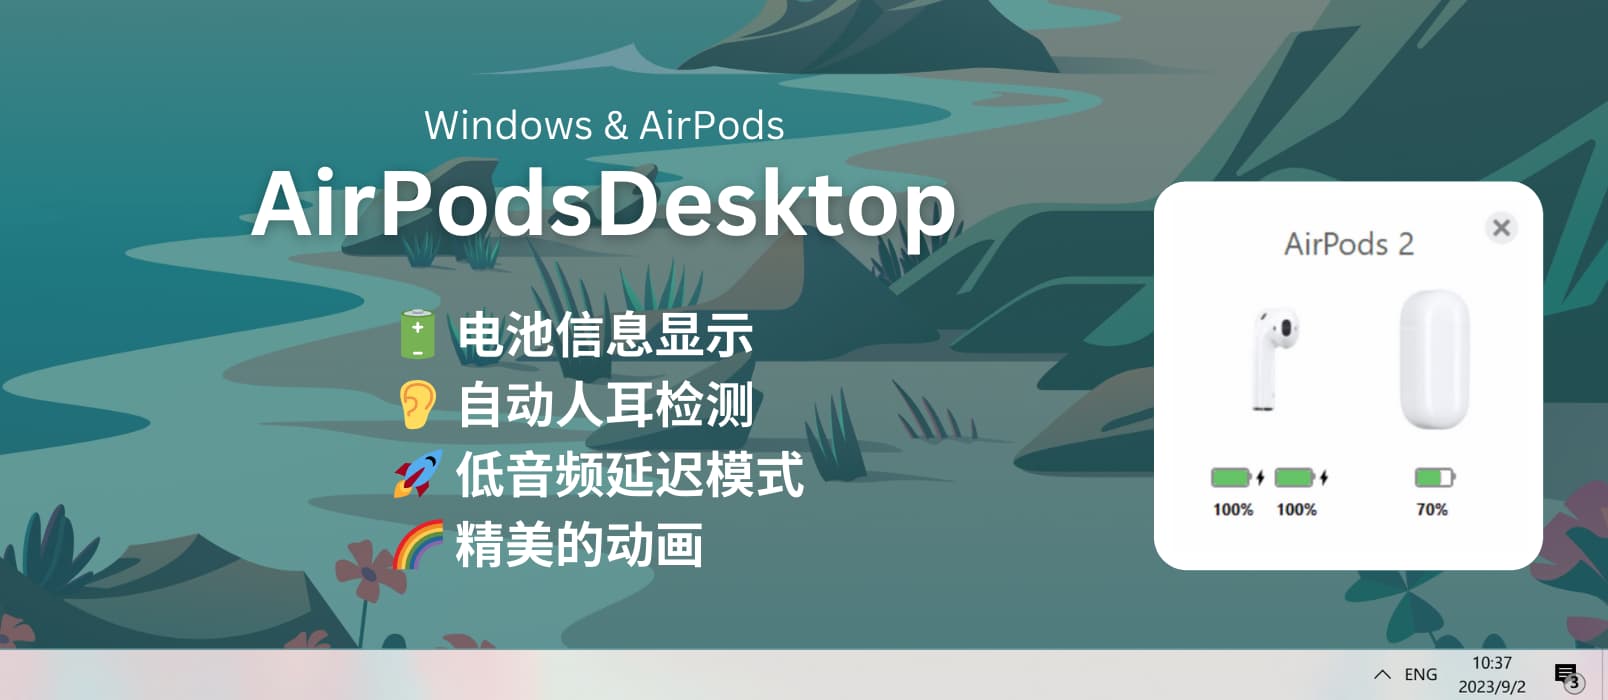 AirPodsDesktop - 开源 AirPods 增强：在 Windows 上动画显示电池信息、入耳检测、低音频延迟